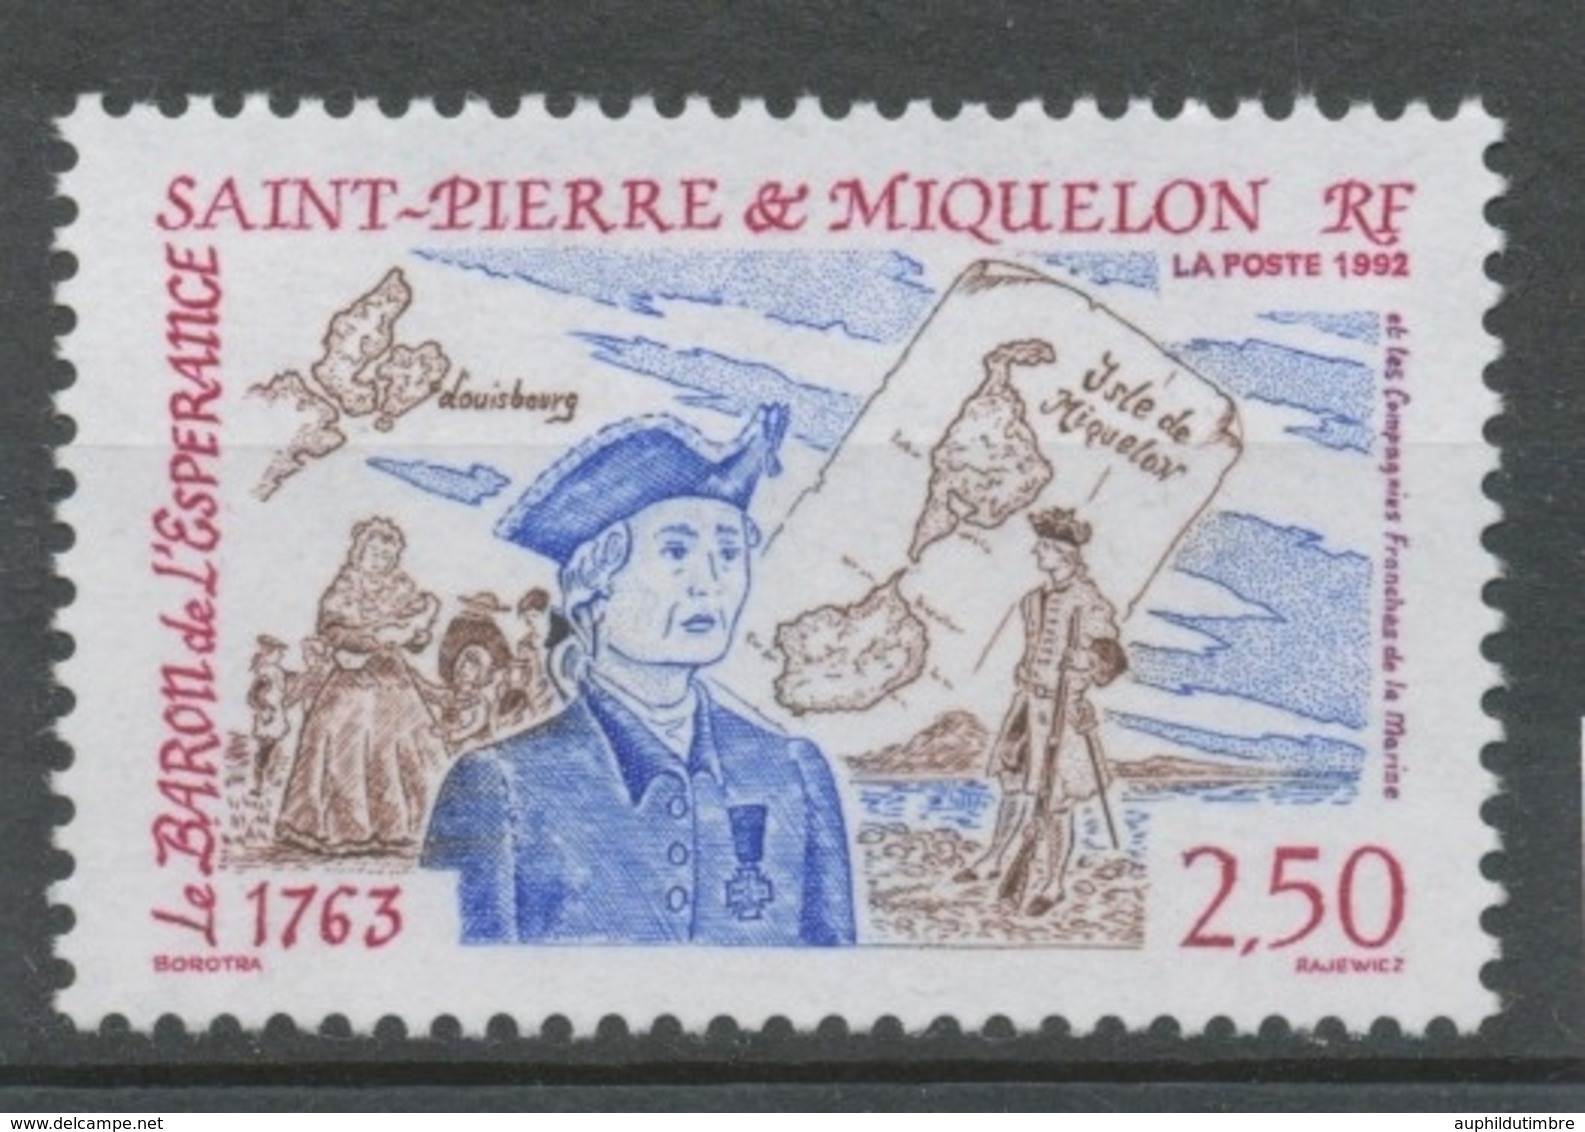 SPM  N°570 Le Baron De L' Espérance, Les Compagnies Franches De La Marine Cartes, Personnages De 1763 2f50 ZC570 - Nuevos